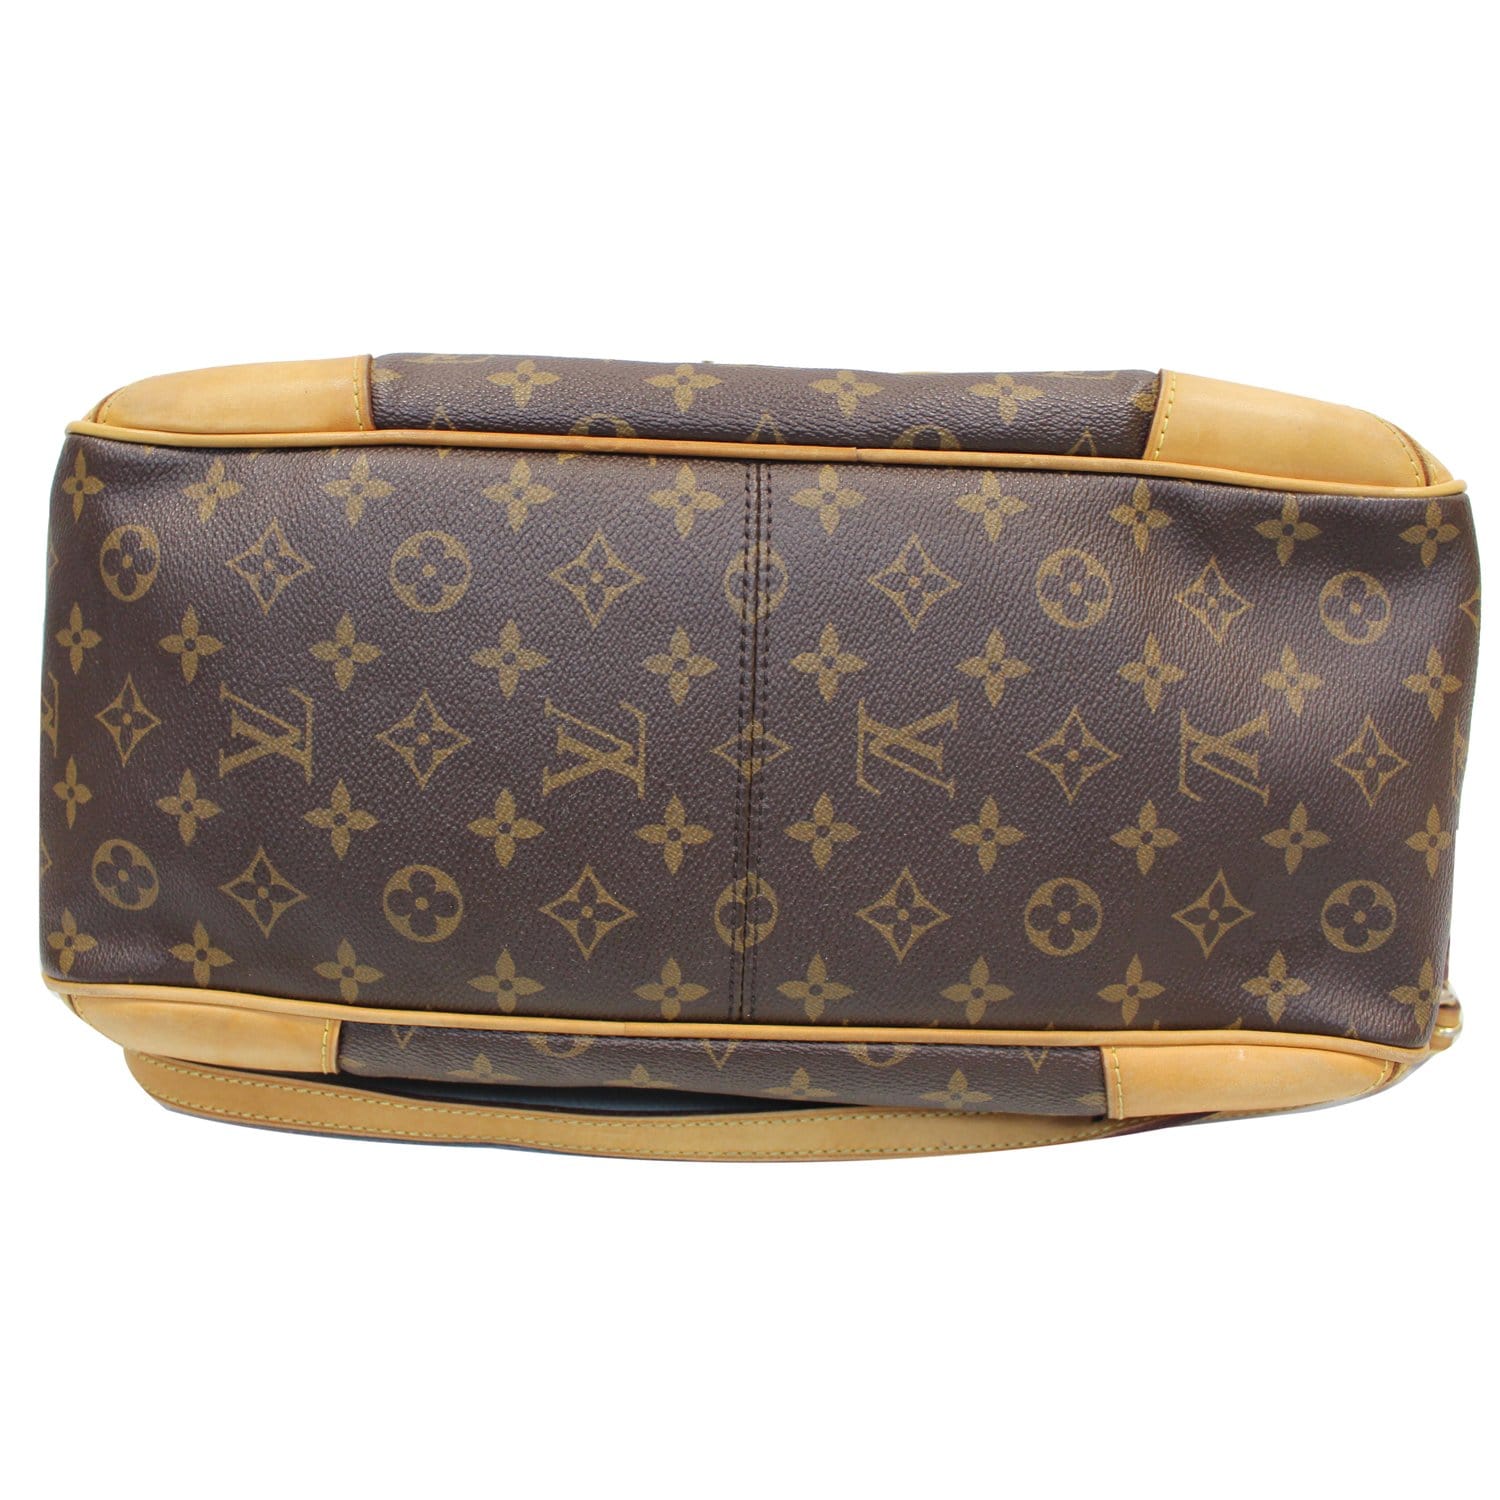 Louis Vuitton Estrela MM Monogram Canvas 3way Carry Bag